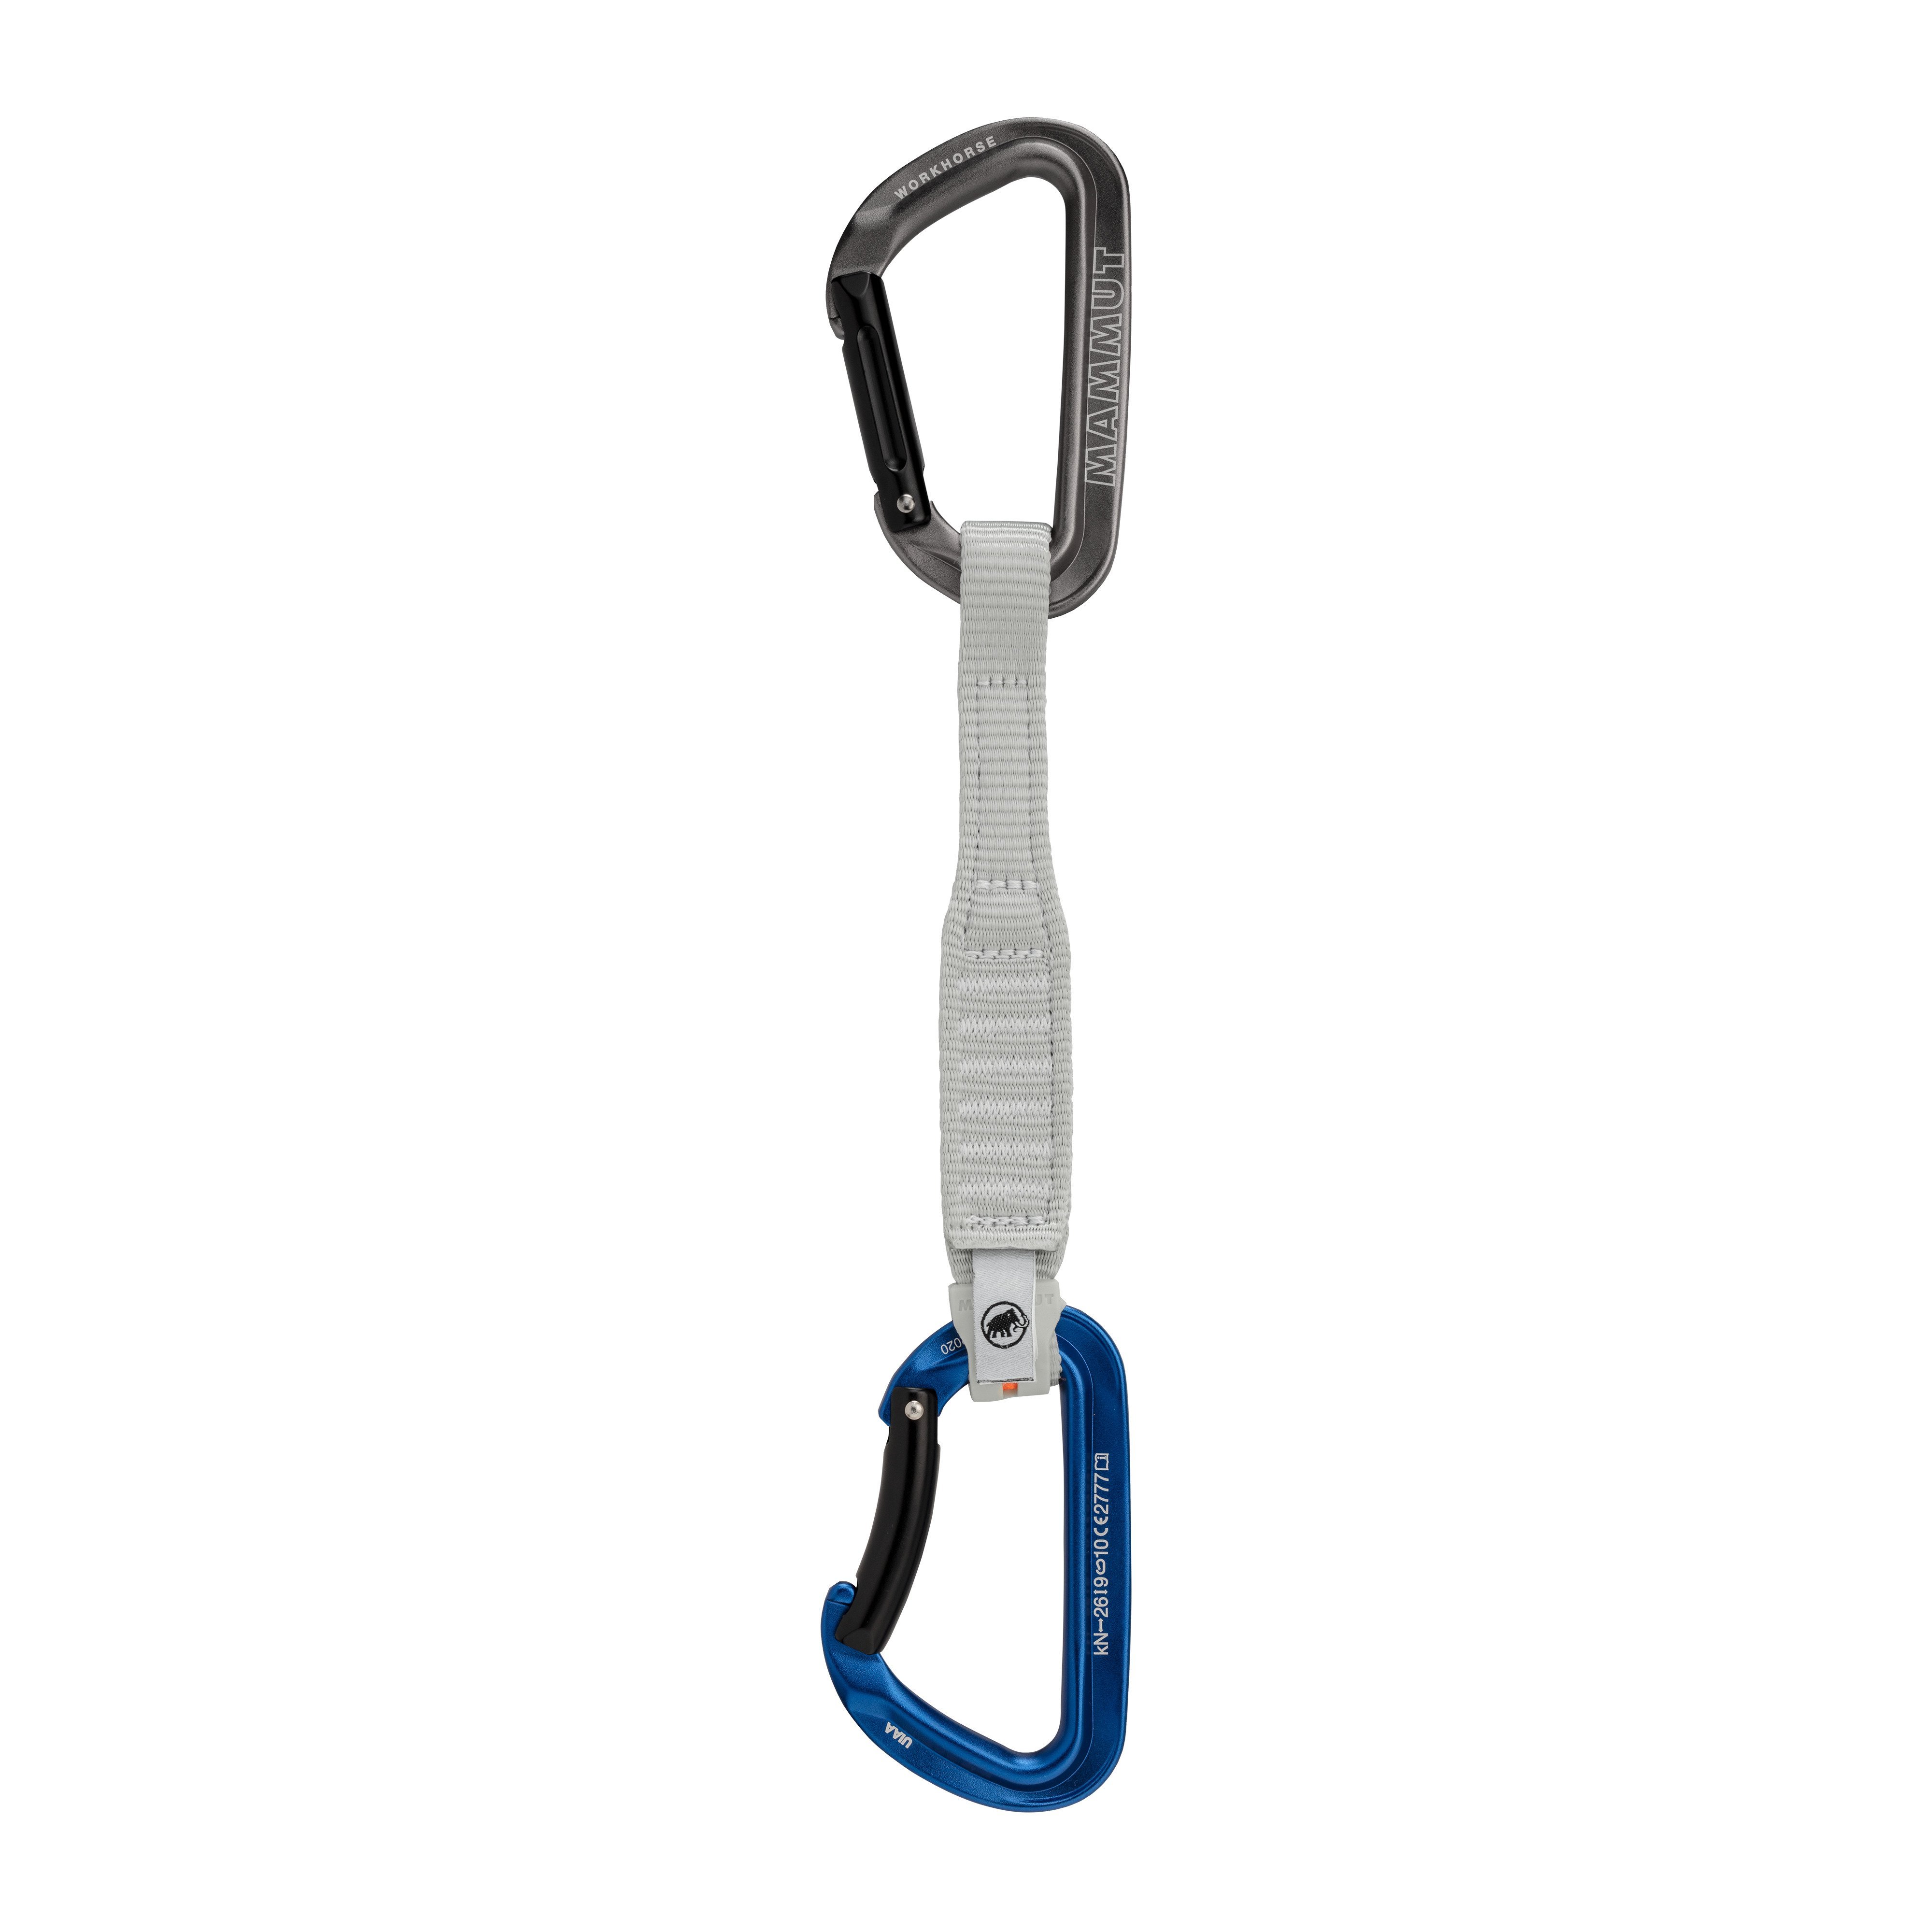 Workhorse Keylock 17 cm Quickdraw - grey-blue, 17 cm product image